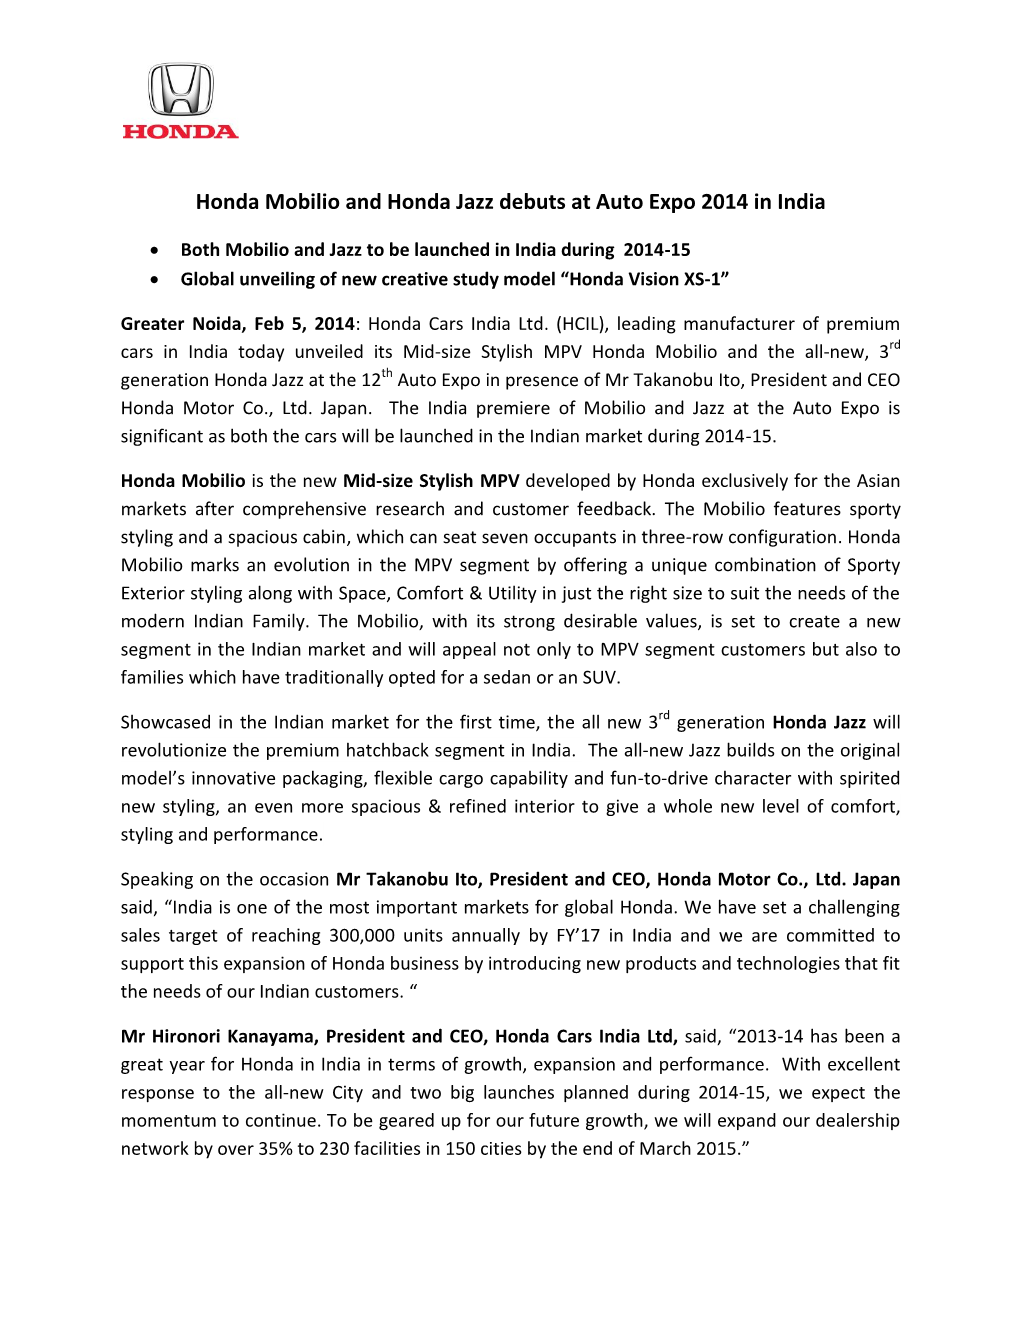 Honda Mobilio and Honda Jazz Debuts at Auto Expo 2014 in India